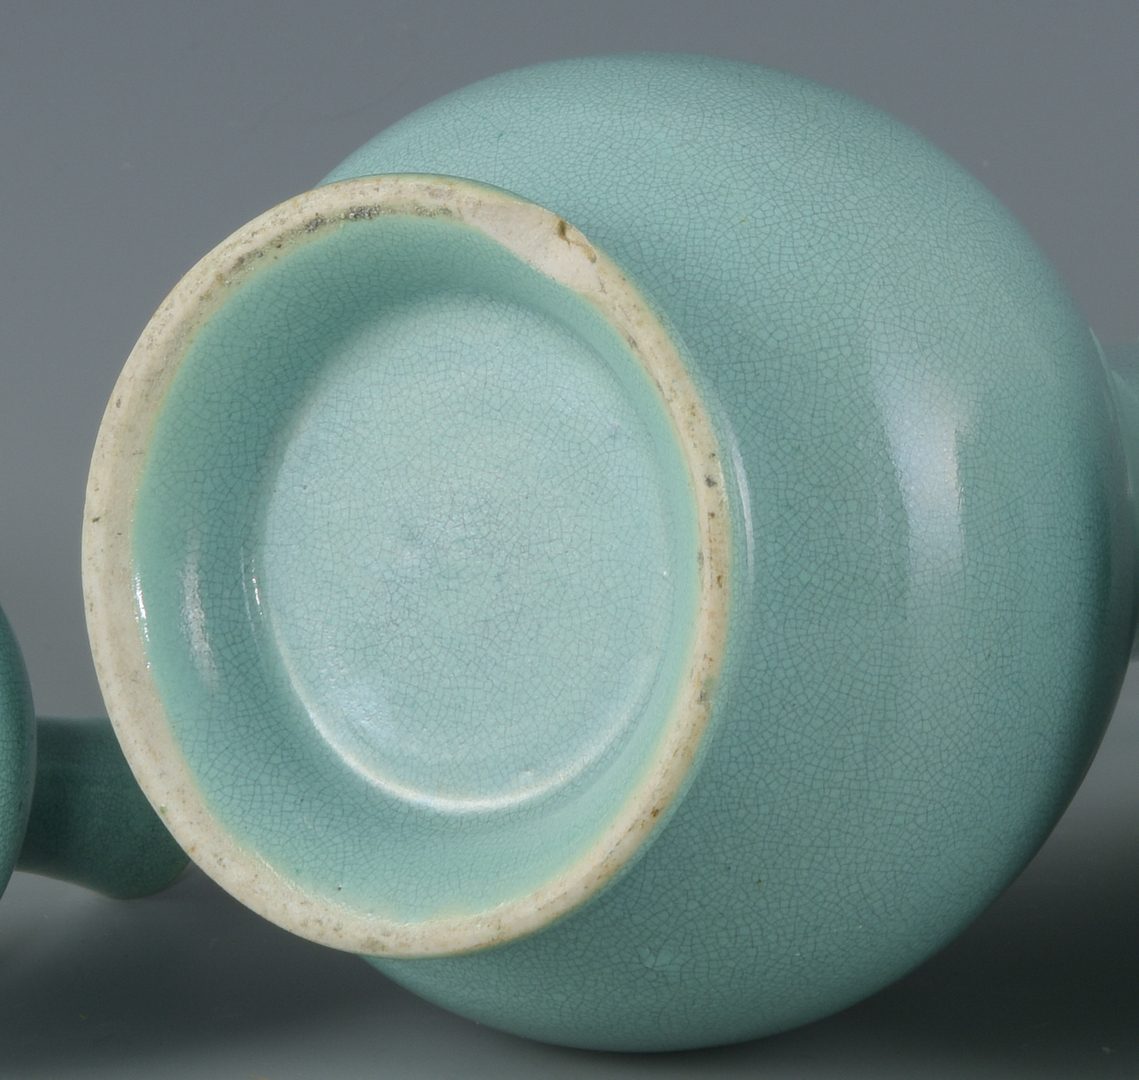 Lot 269: 4 Chinese Porcelain Bottle Vases w/ Stands